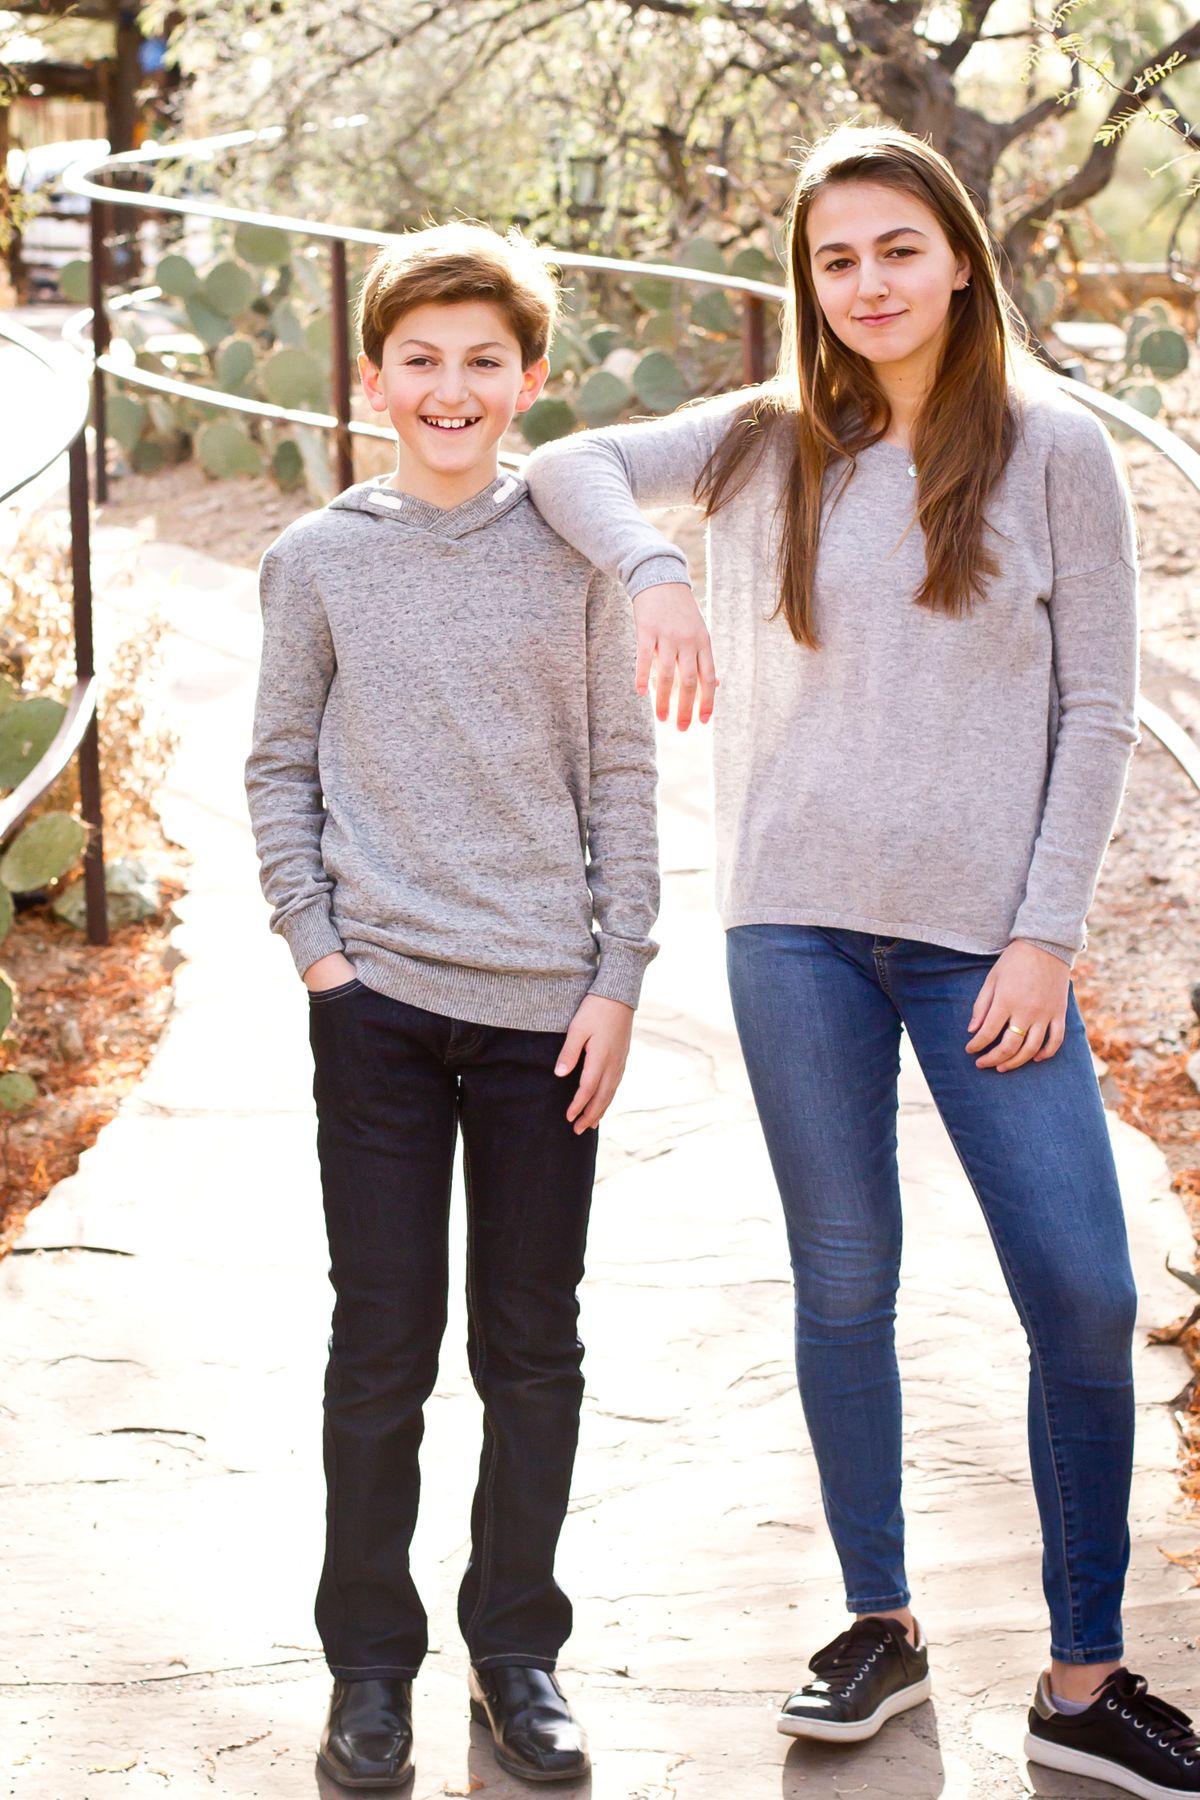 Tucson child sibling portrait photography